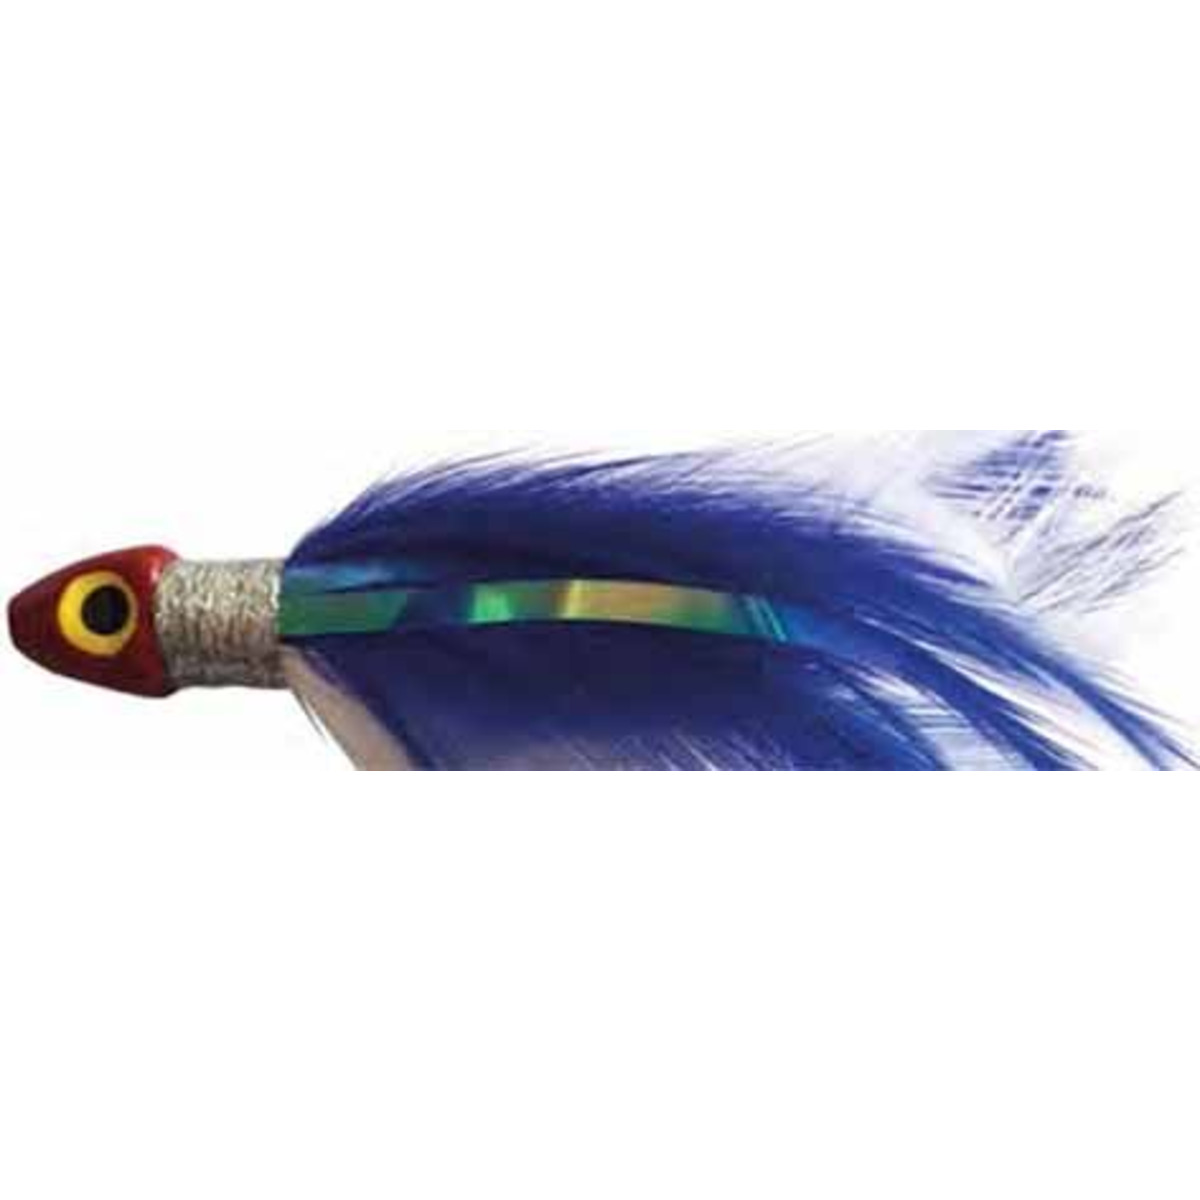 H2o Pro Feather Jet - Blue White - 19 g - 8.5 cm